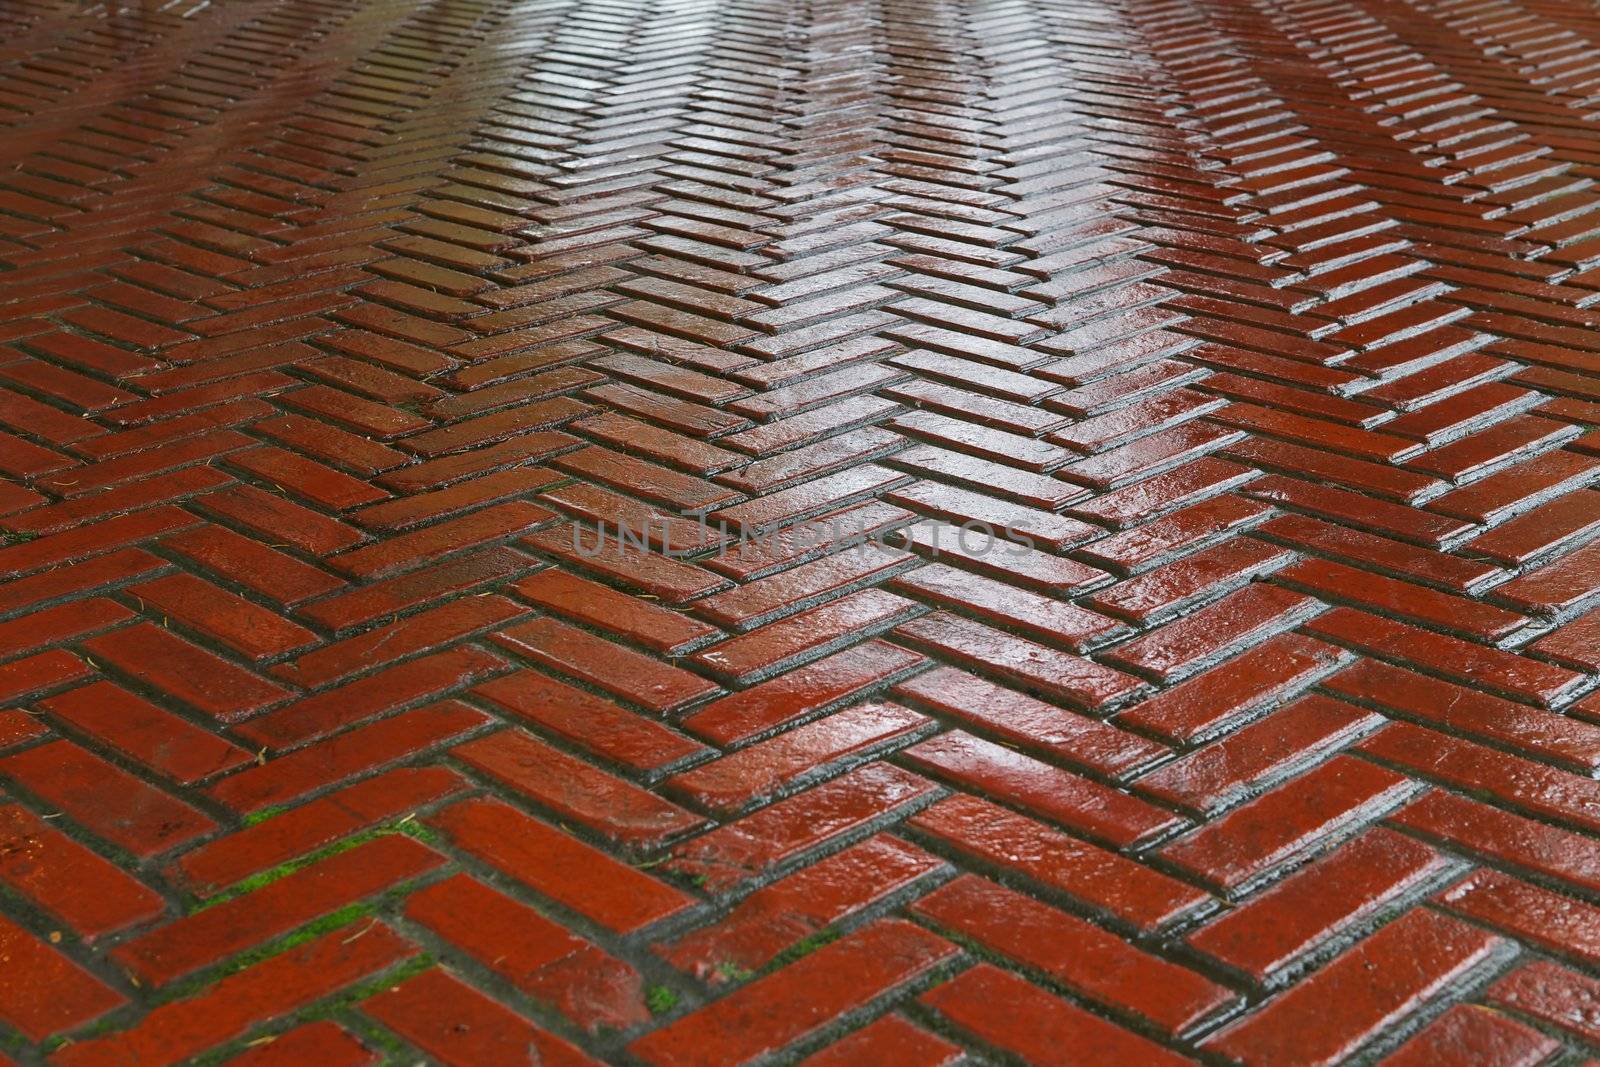 Herring bone red brick road after a rain